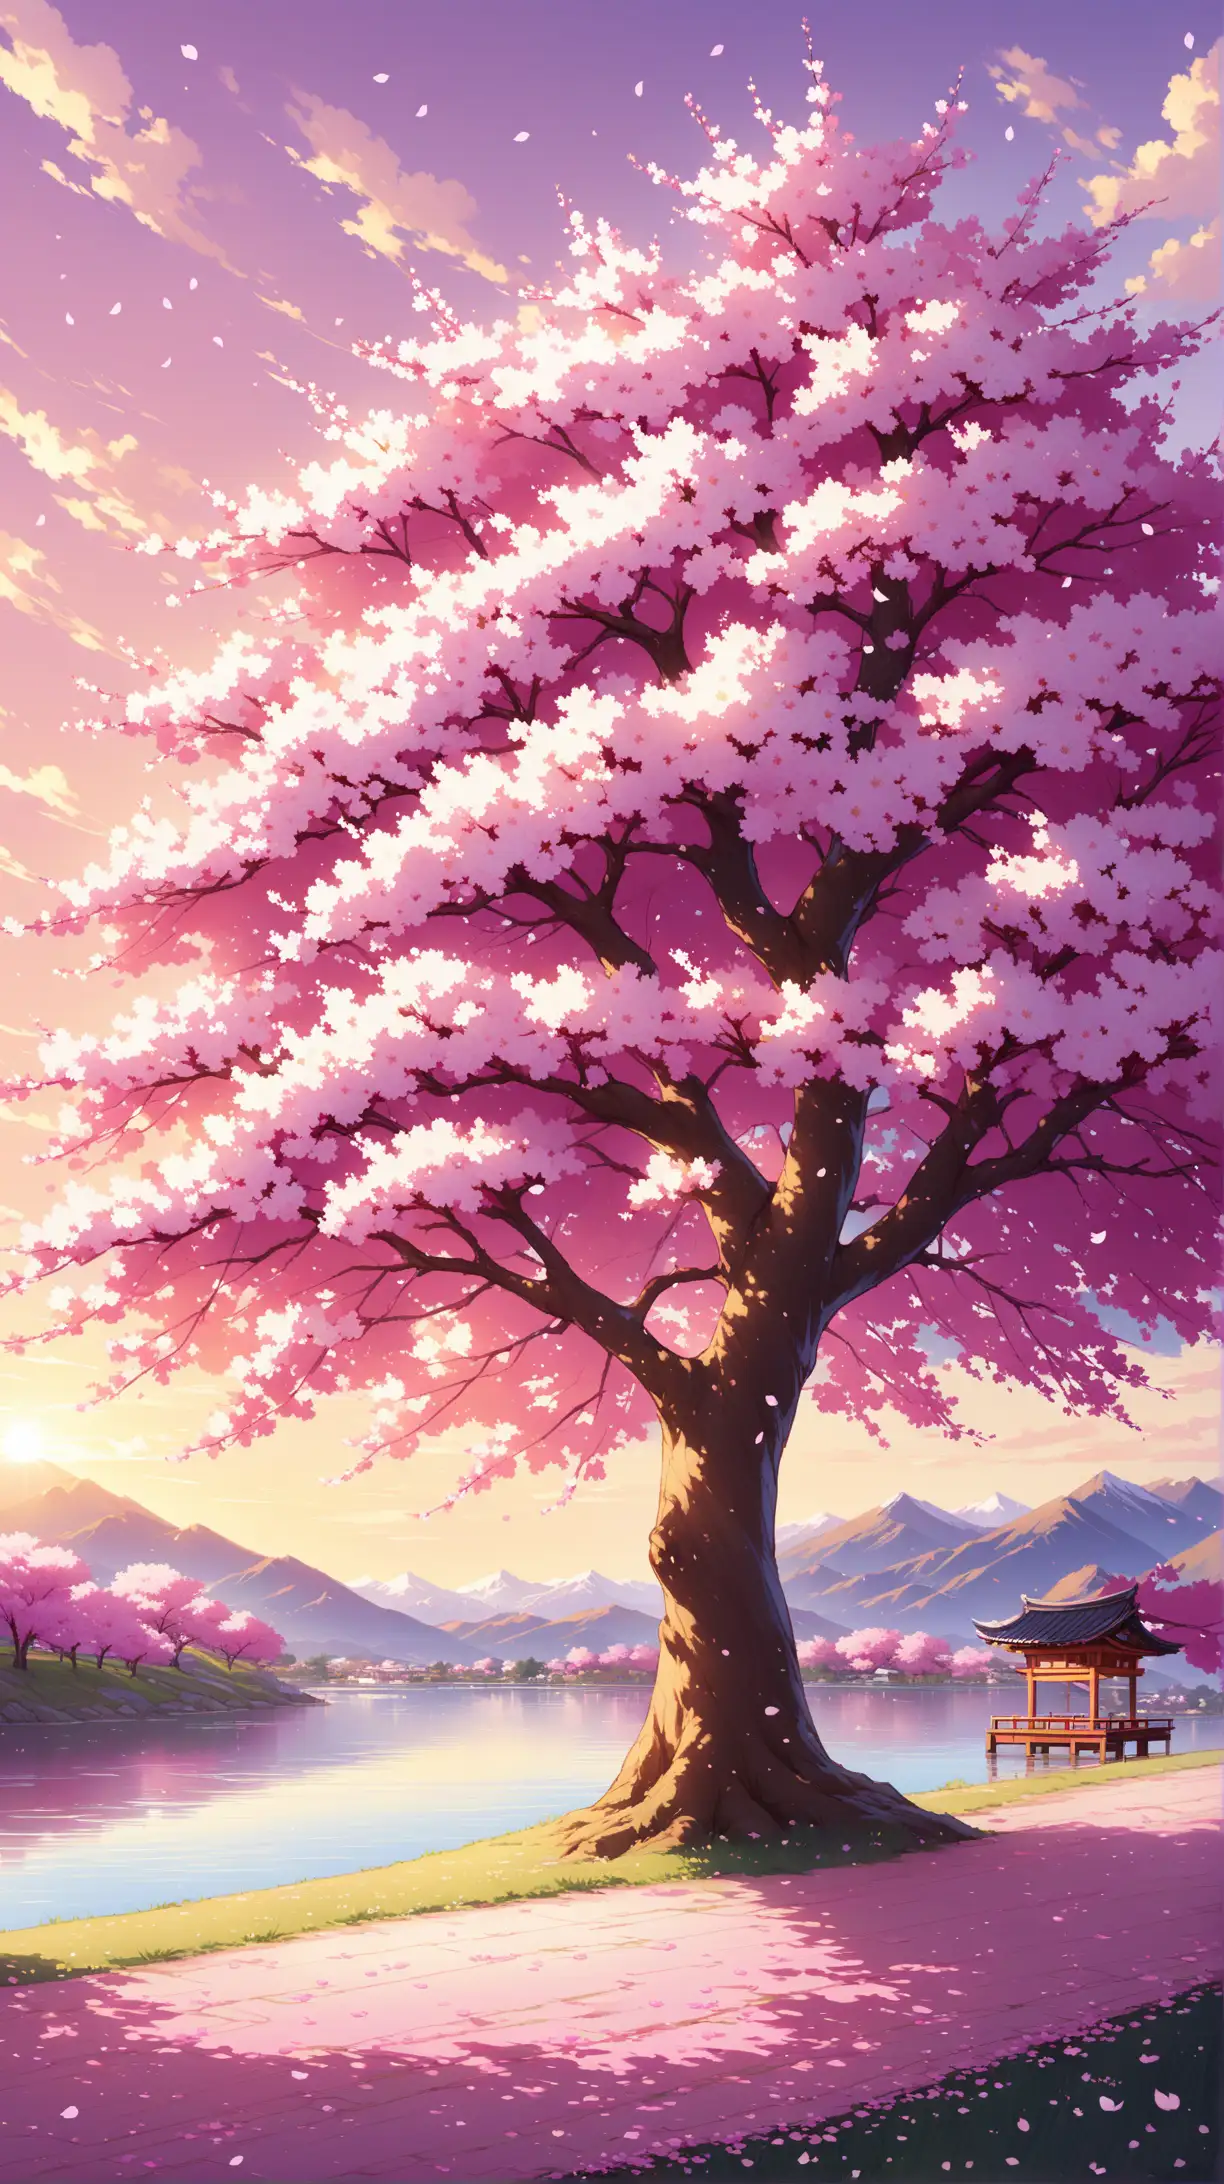 Vibrant Cherry Blossom Tree in Spring